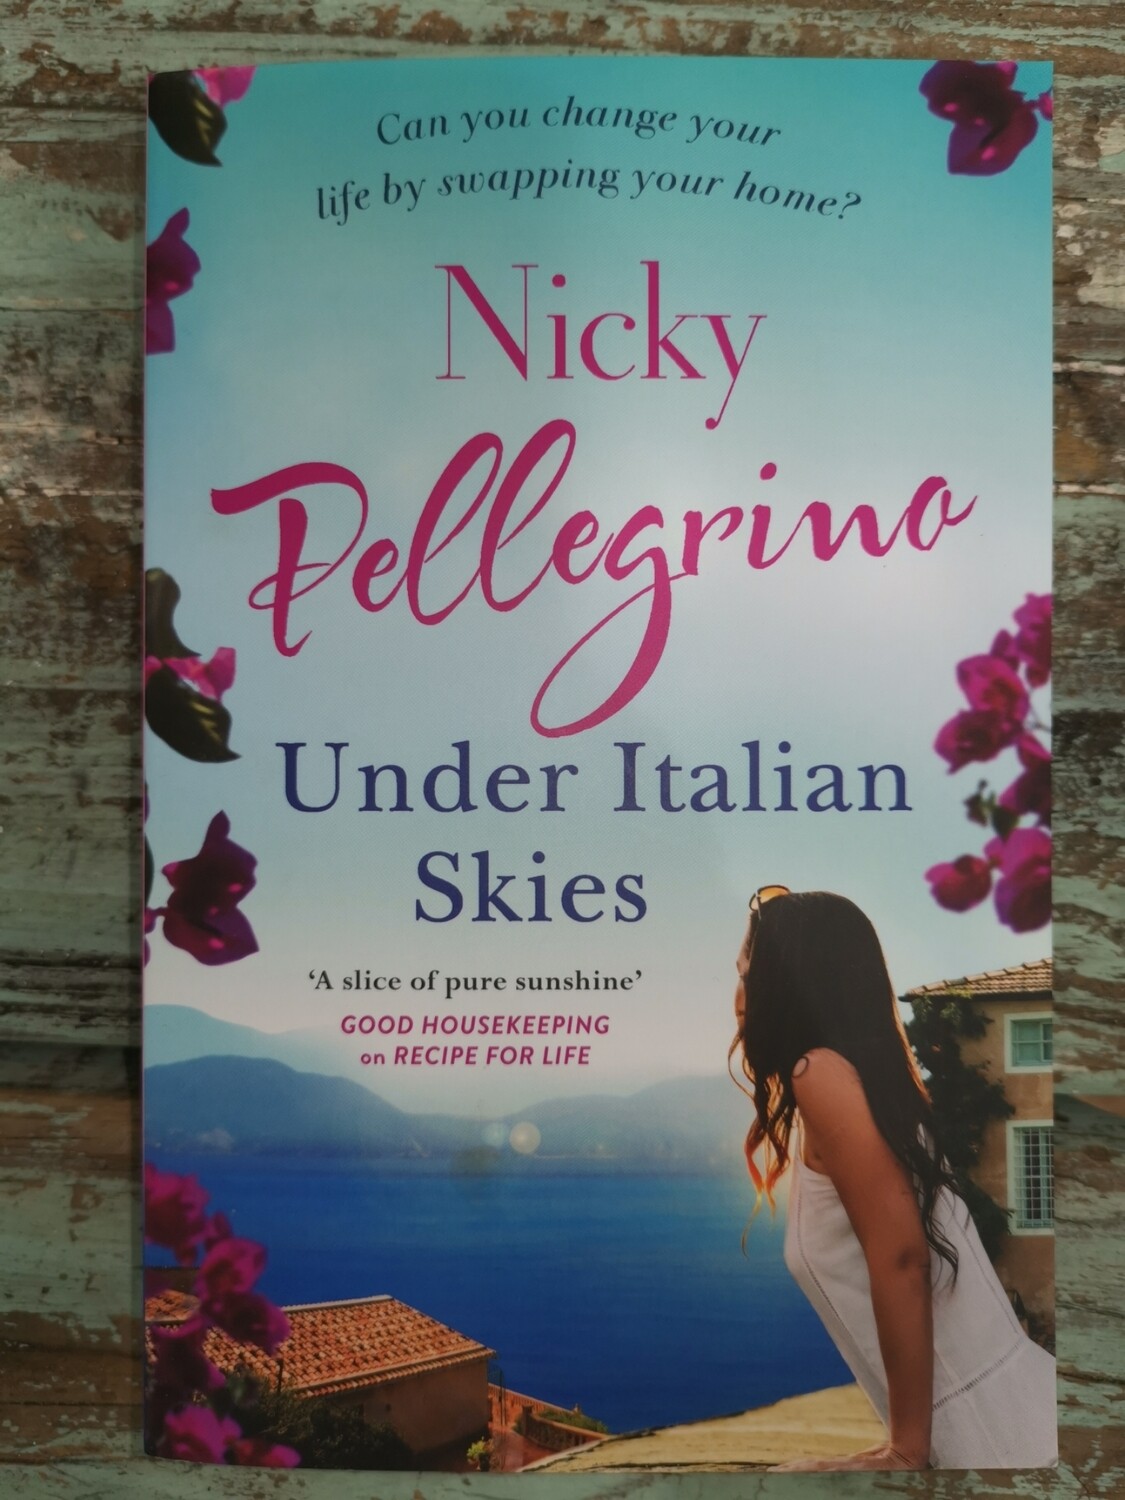 Under Italian skies, Nicky Pellegrino